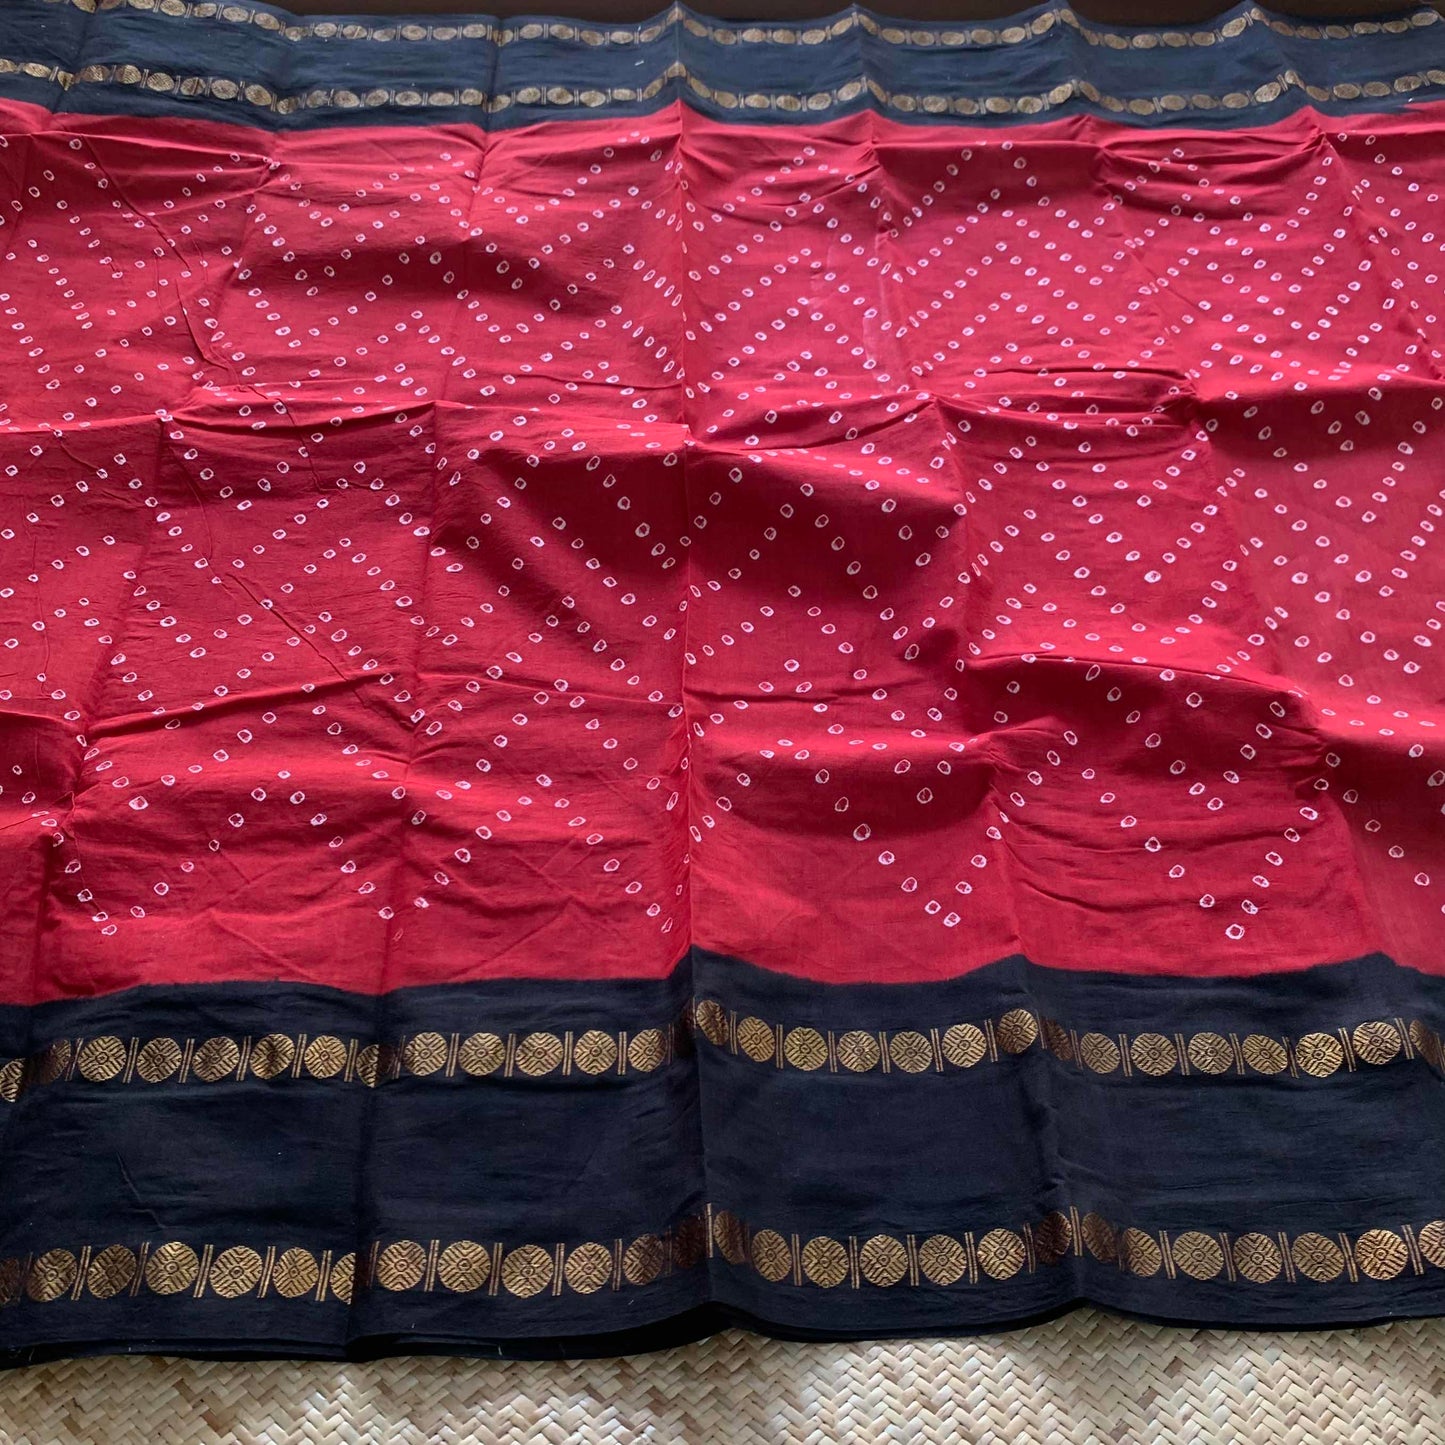 Red Saree With Black Border, Hand knotted Sungudi On a Rudraksham Border Cotton saree, Kaikattu Sungadi